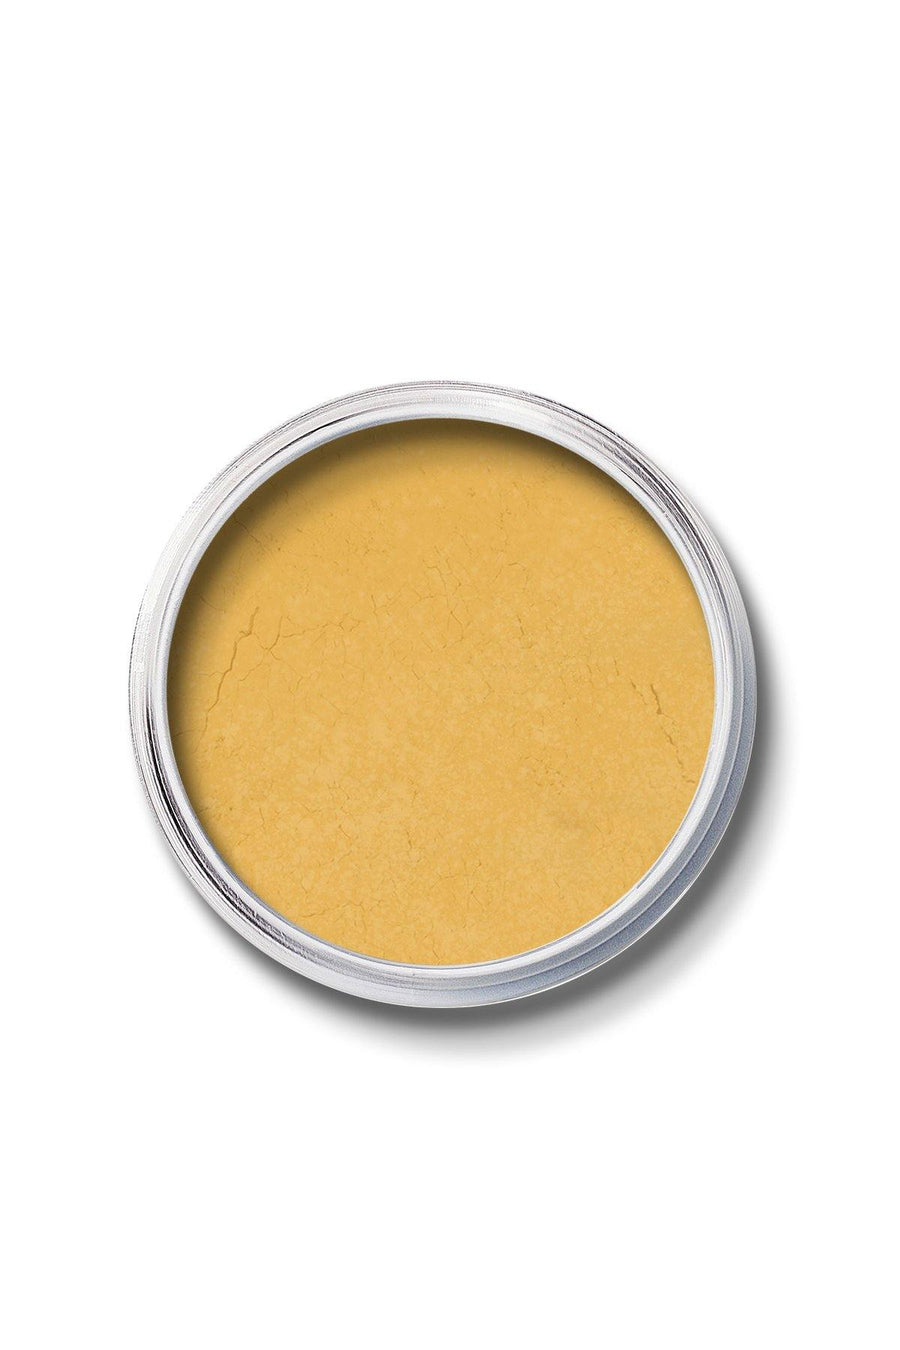 Mineral SPF 15 Foundation #10 - Golden Olive - Blend Mineral Cosmetics